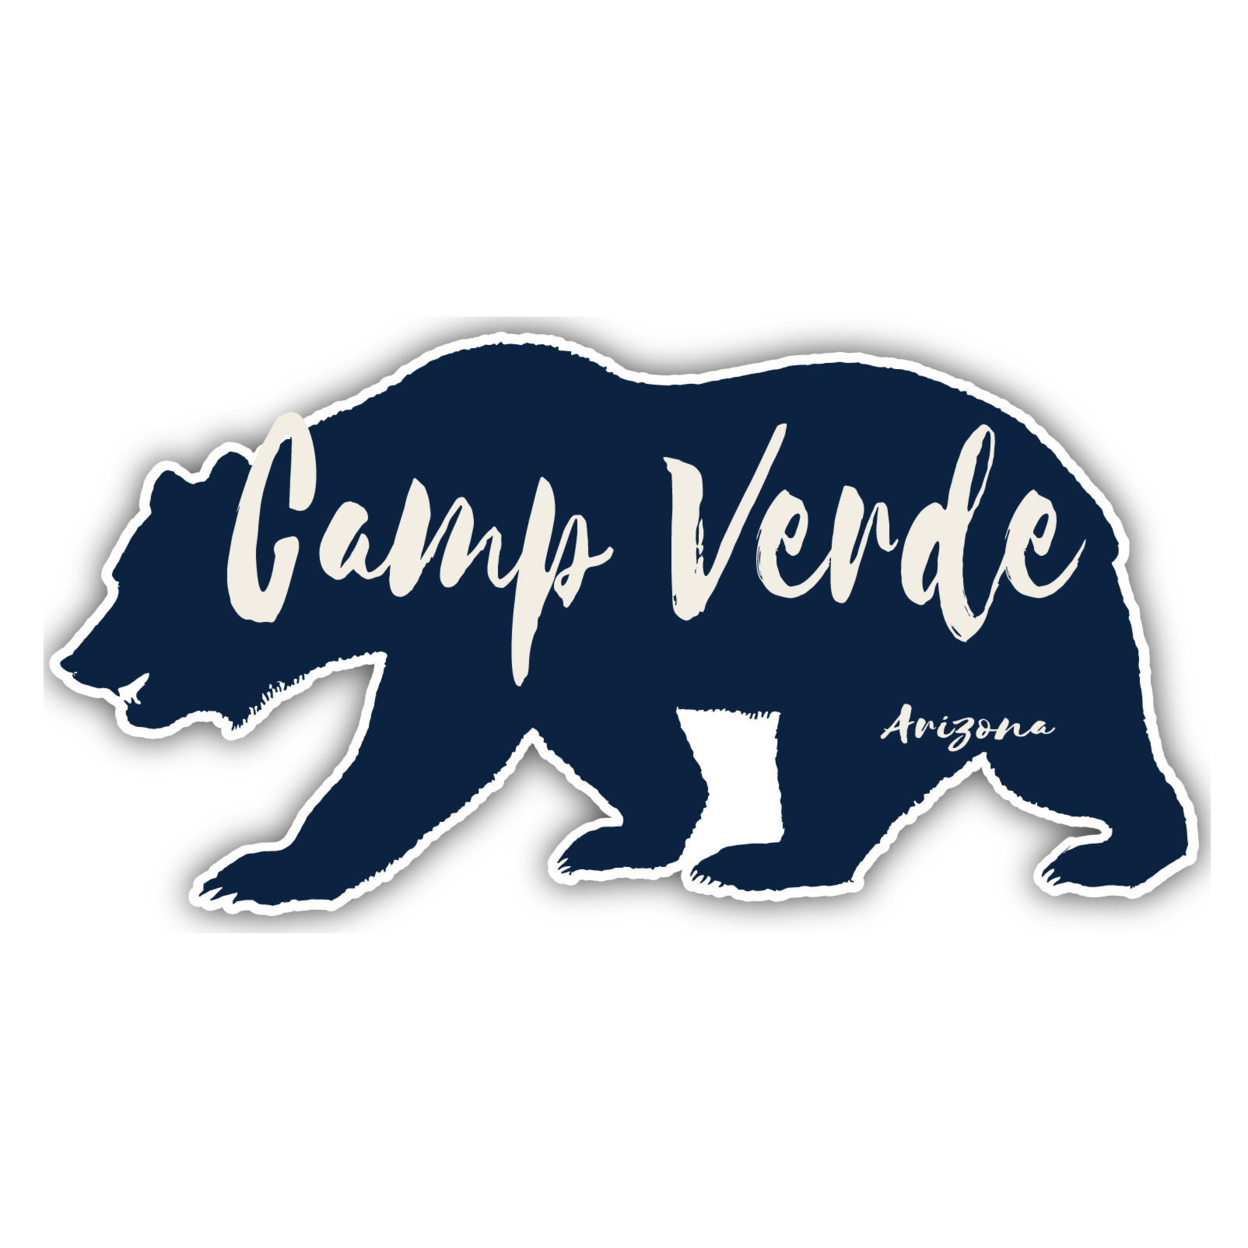 Camp Verde Arizona Souvenir Decorative Stickers (Choose Theme And Size) - Single Unit, 4-Inch, Camp Life